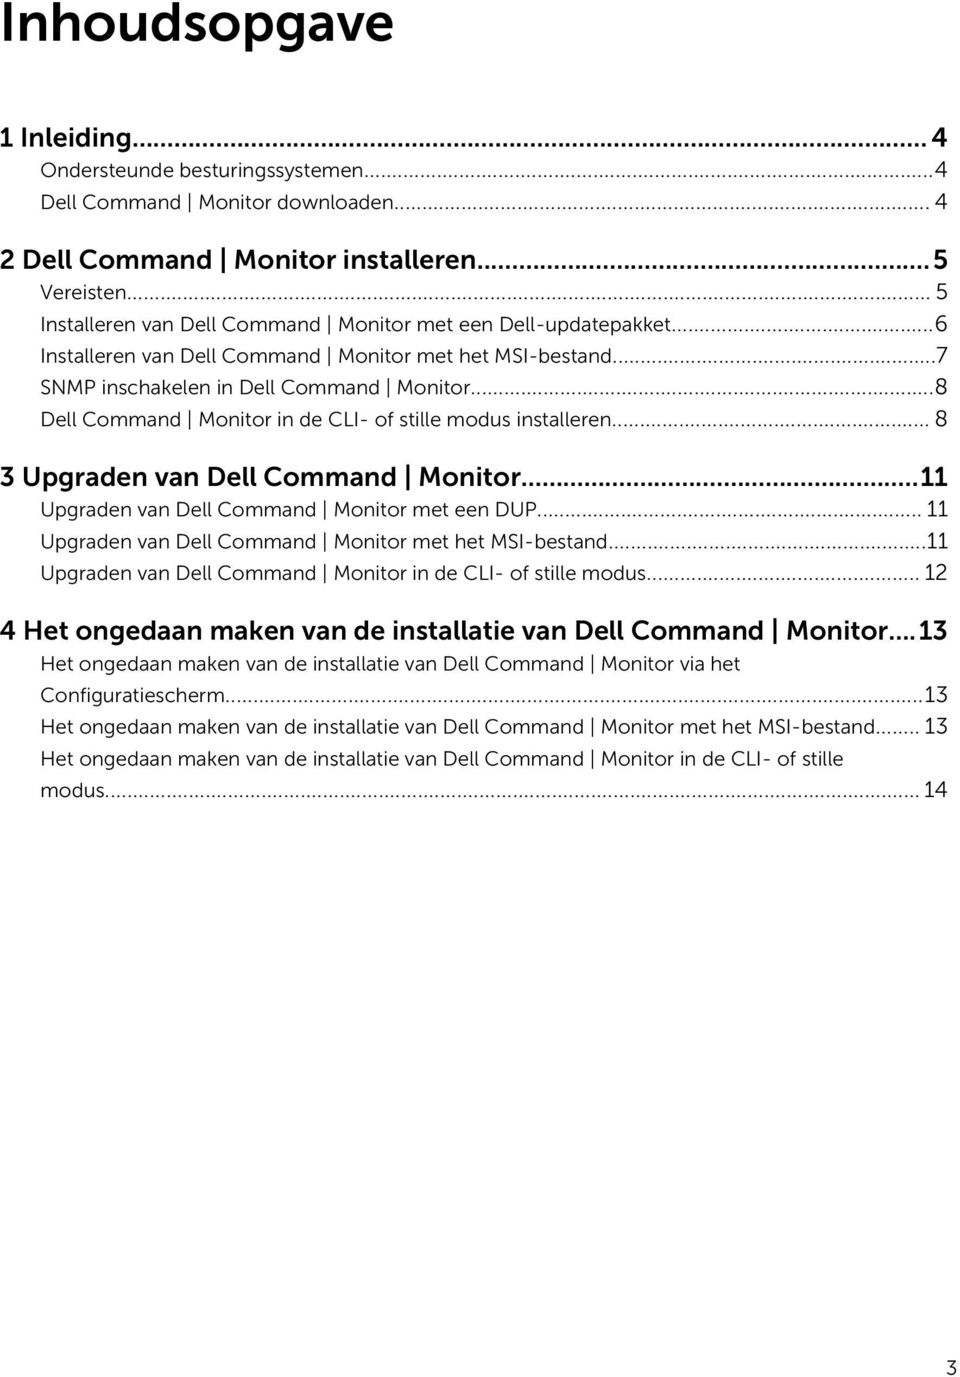 ..8 Dell Command Monitor in de CLI- of stille modus installeren... 8 3 Upgraden van Dell Command Monitor...11 Upgraden van Dell Command Monitor met een DUP.